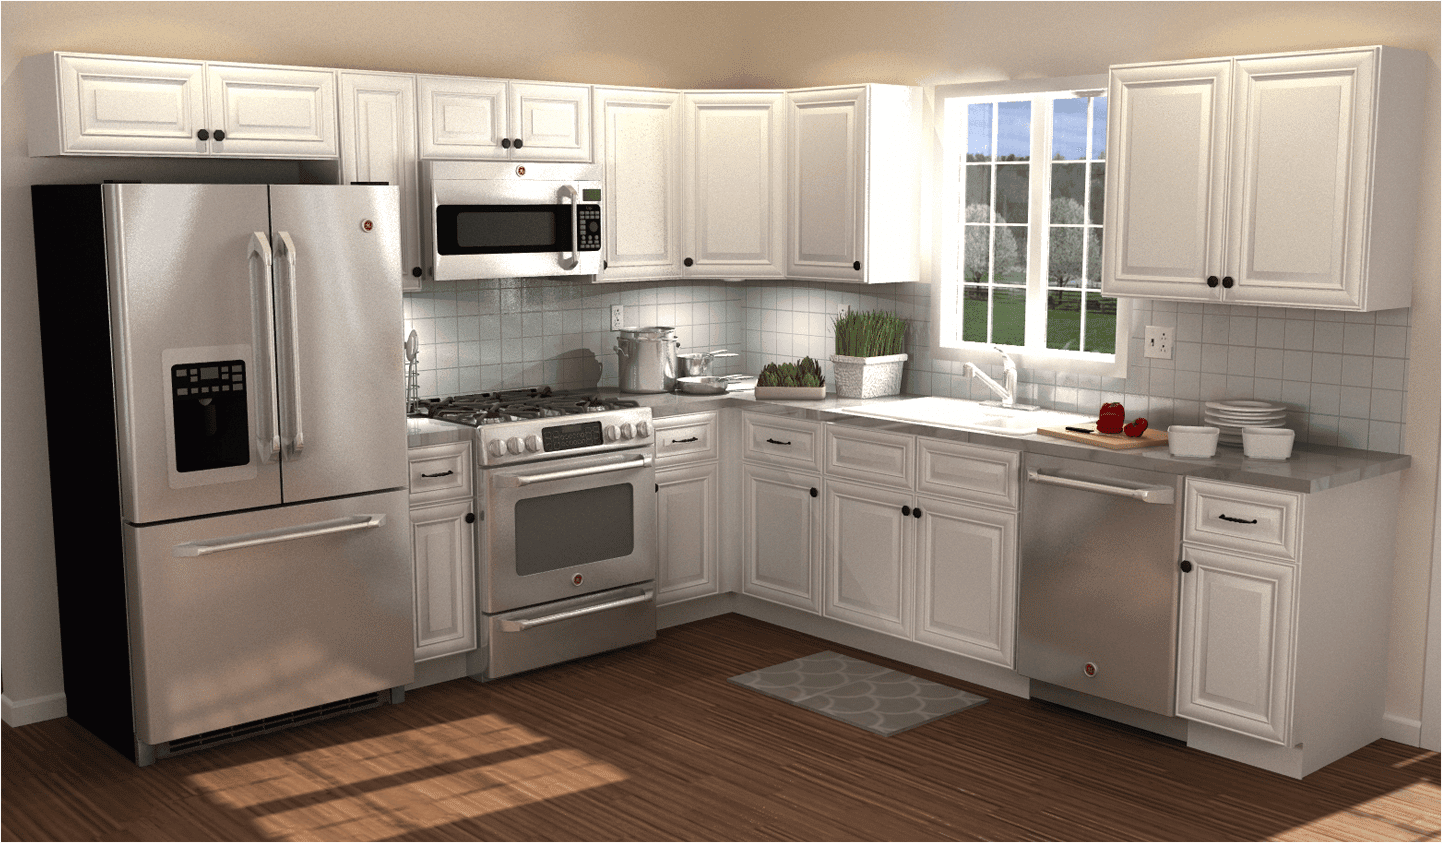 10x10 kitchen design idea